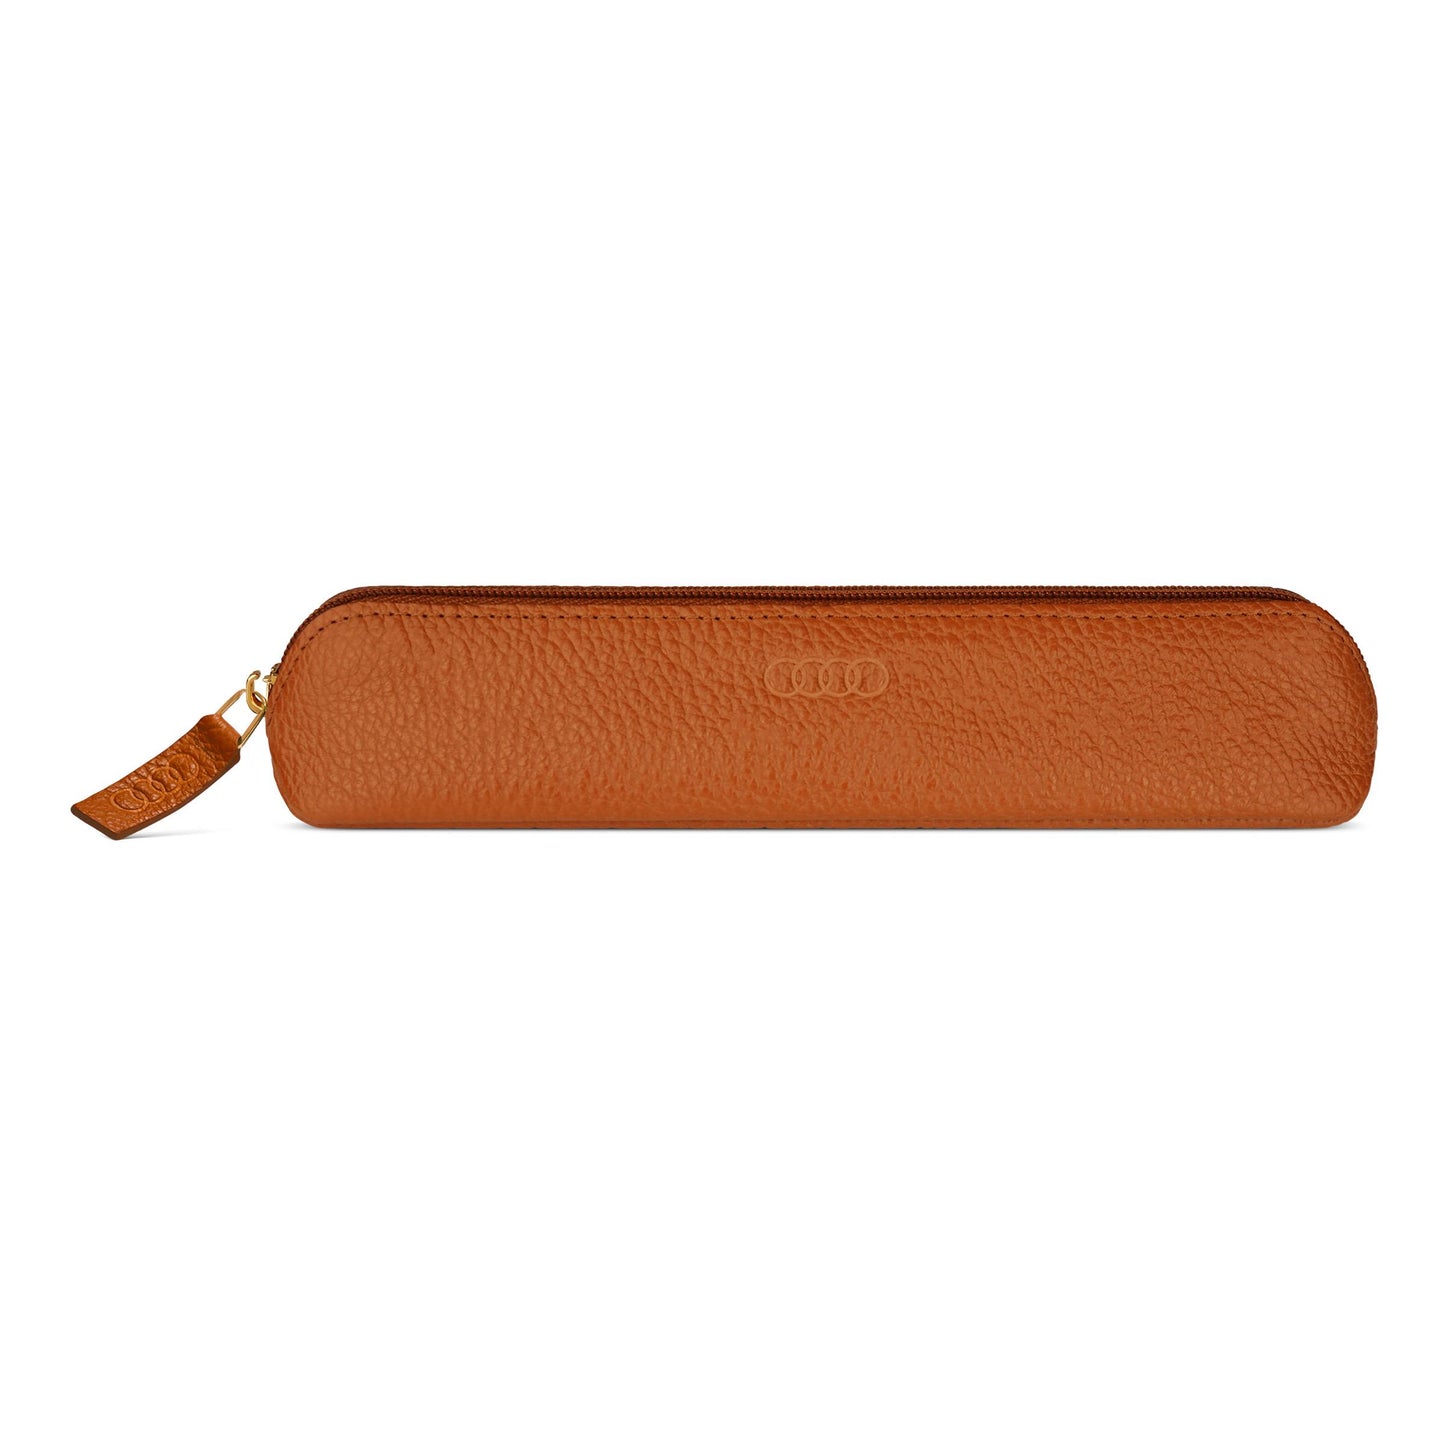 Audi leather pencil case, brown